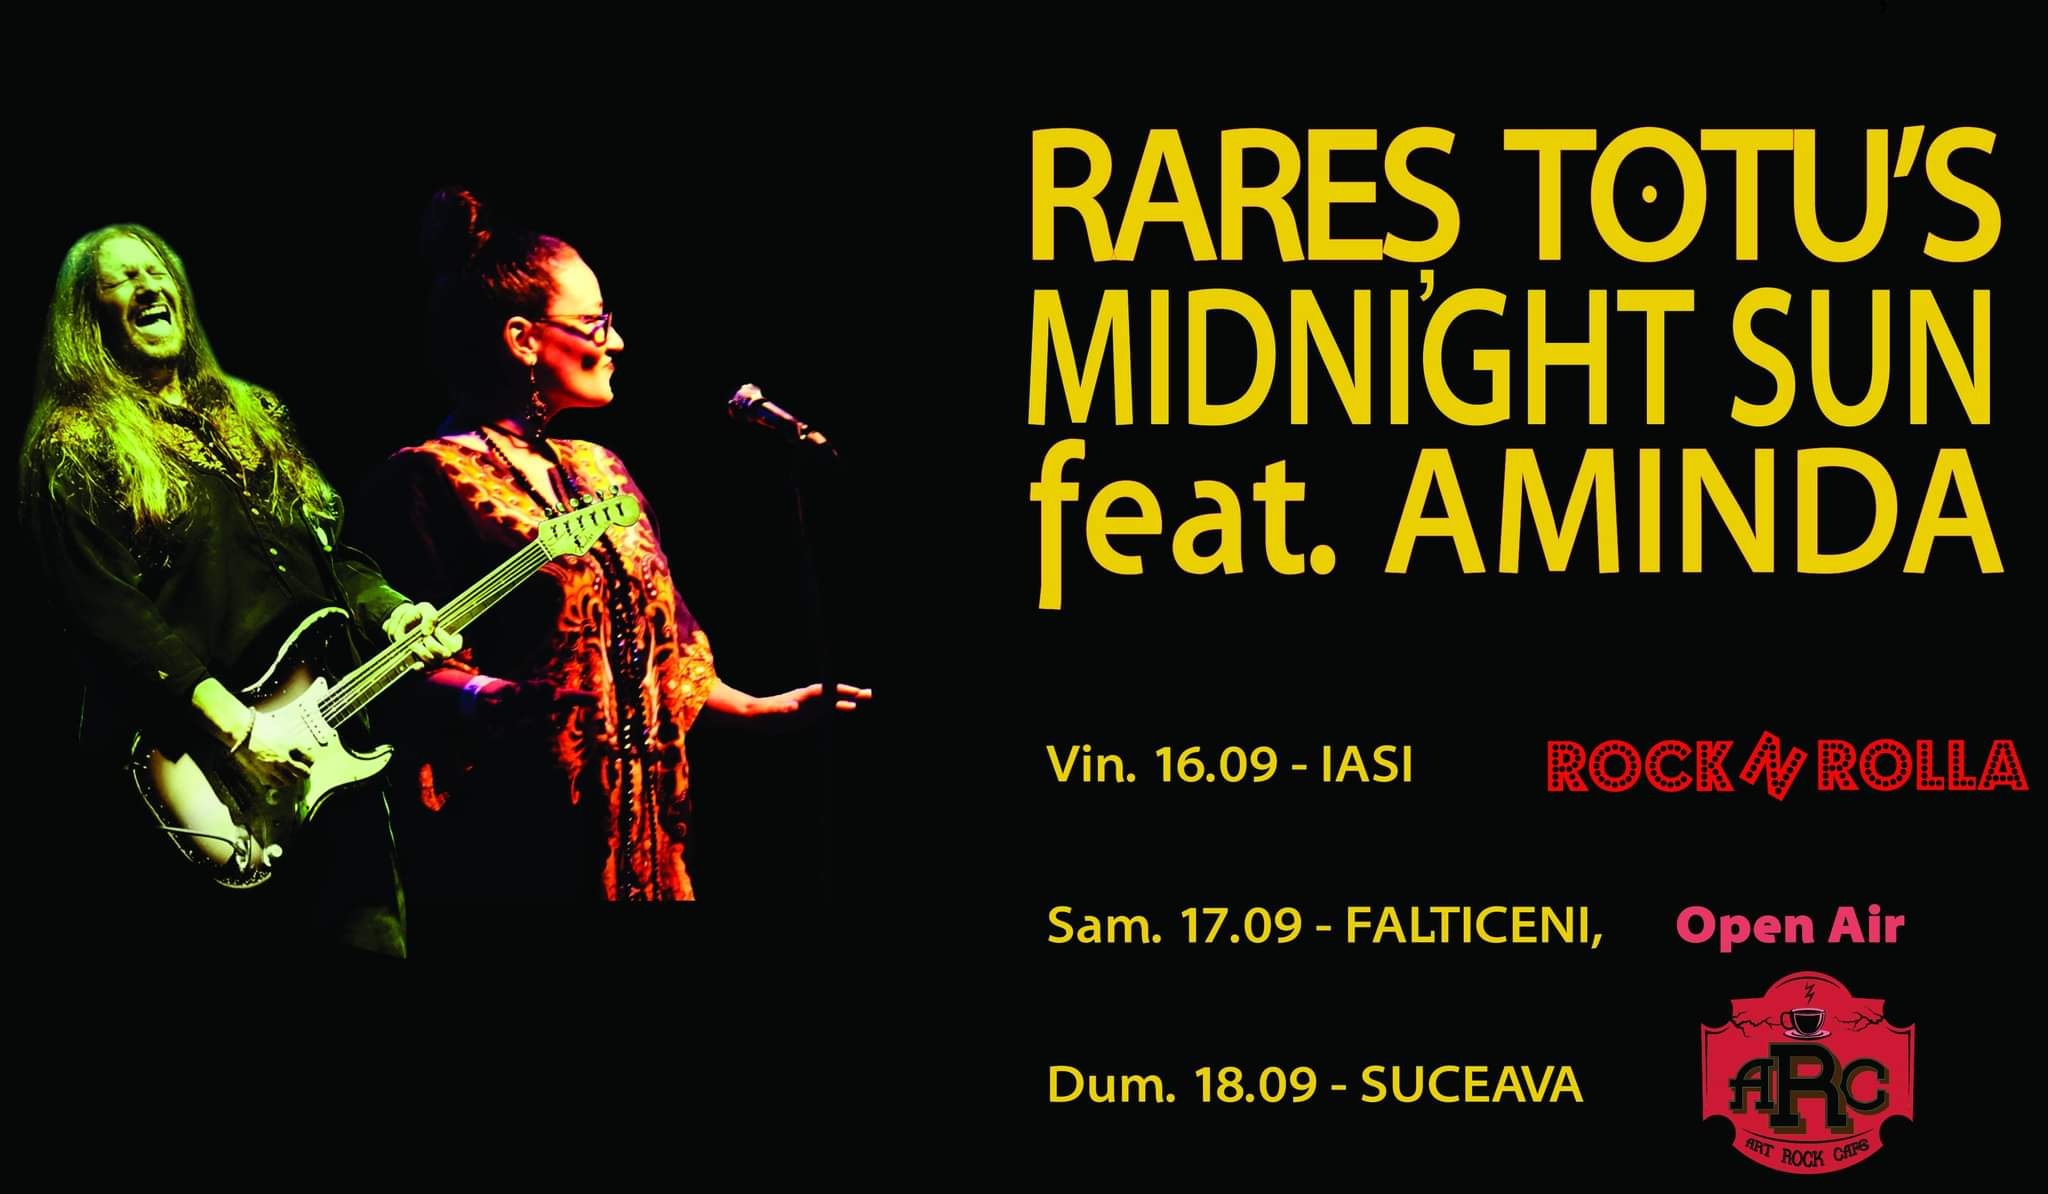 Concerte Rares Totu’s Midnight Sun & Aminda în zona Moldovei